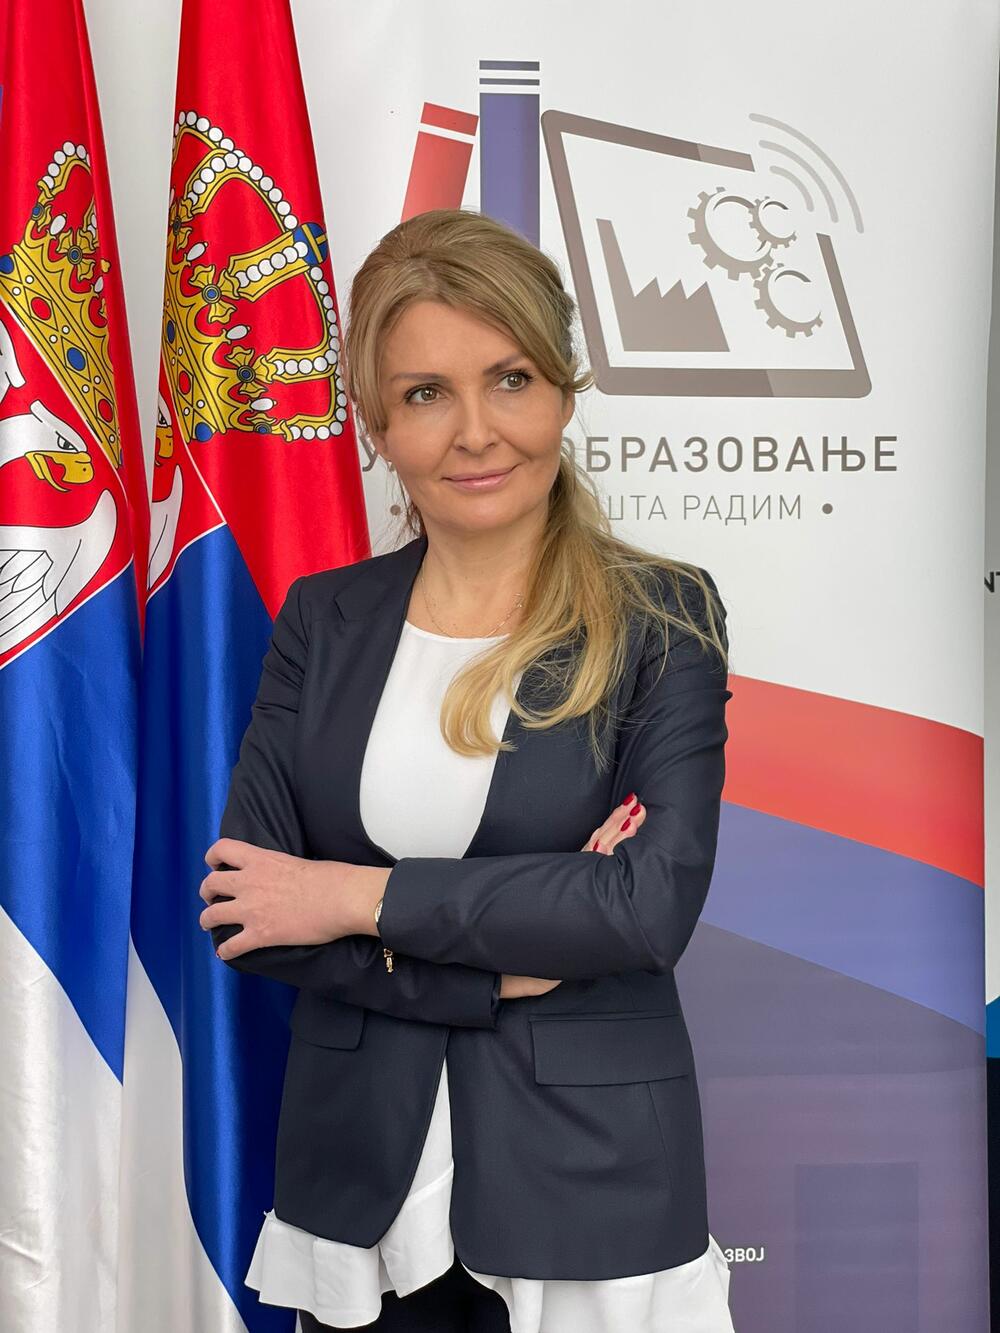 Gabrijela Gurjić